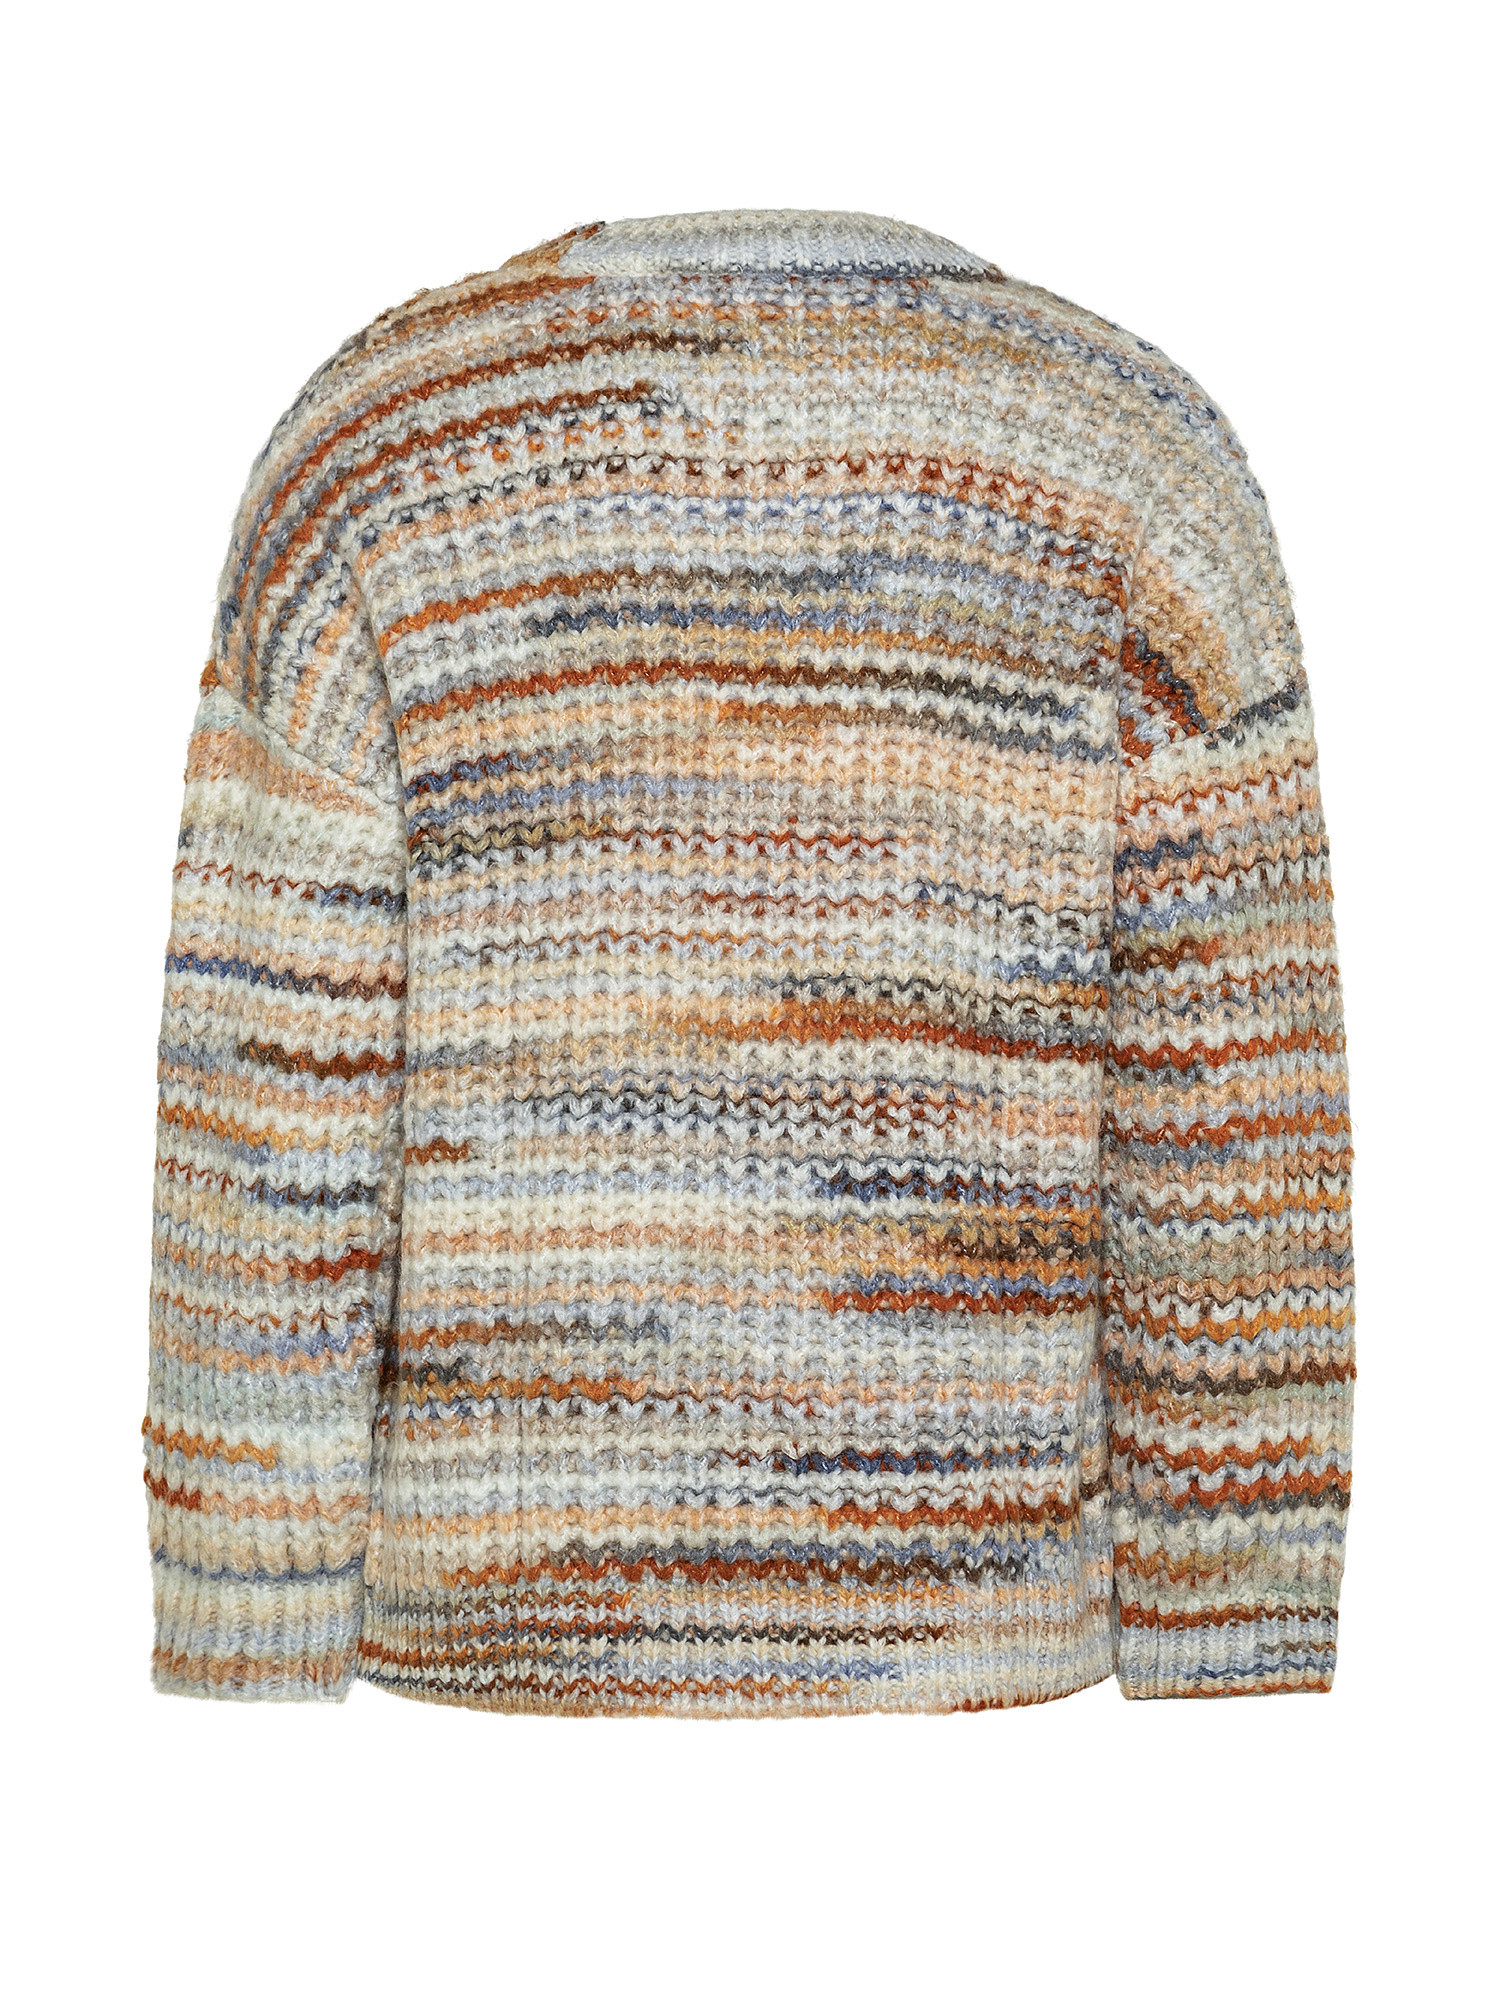 Crewneck pullover, Multicolor, large image number 1